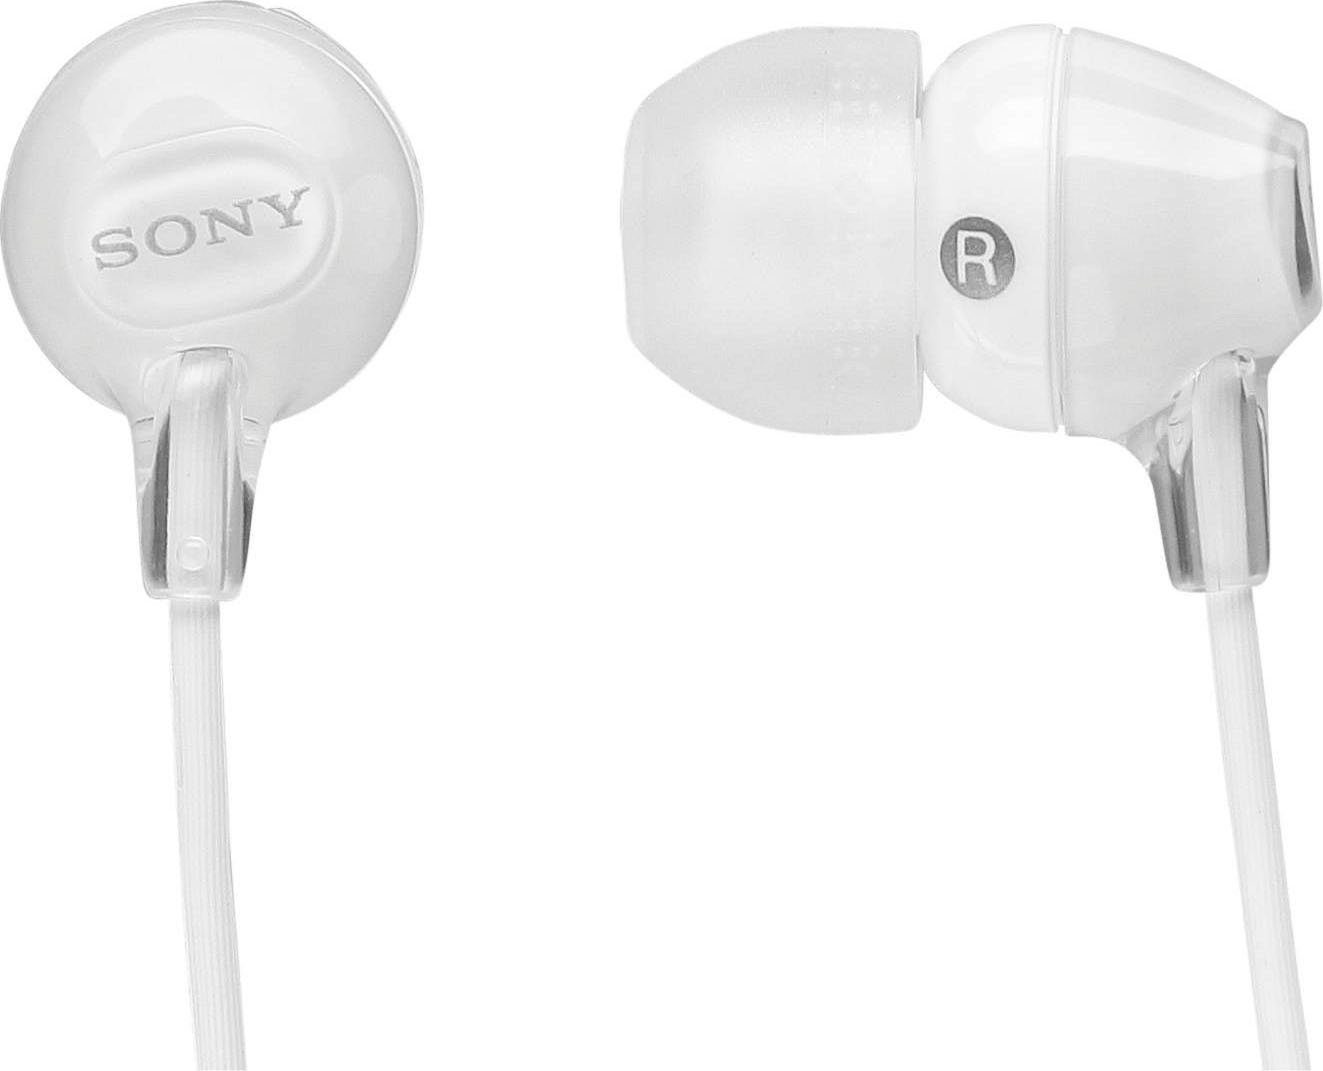 weiß mit MDR-EX15AP (Rauschunterdrückung, Sony Fernbedienung) In-Ear-Kopfhörer